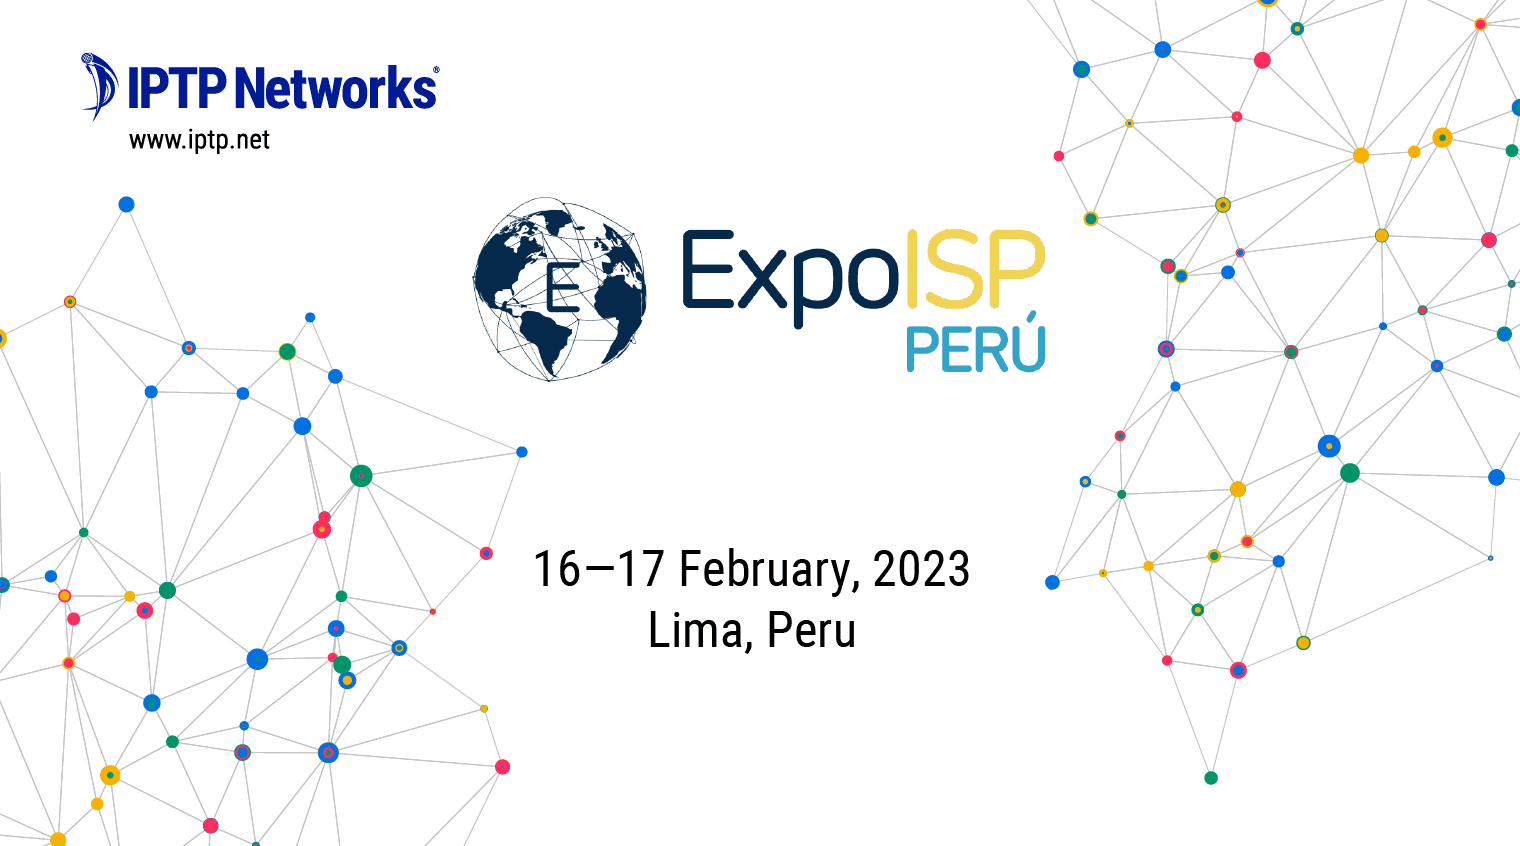 ExpoISP Perú 2023